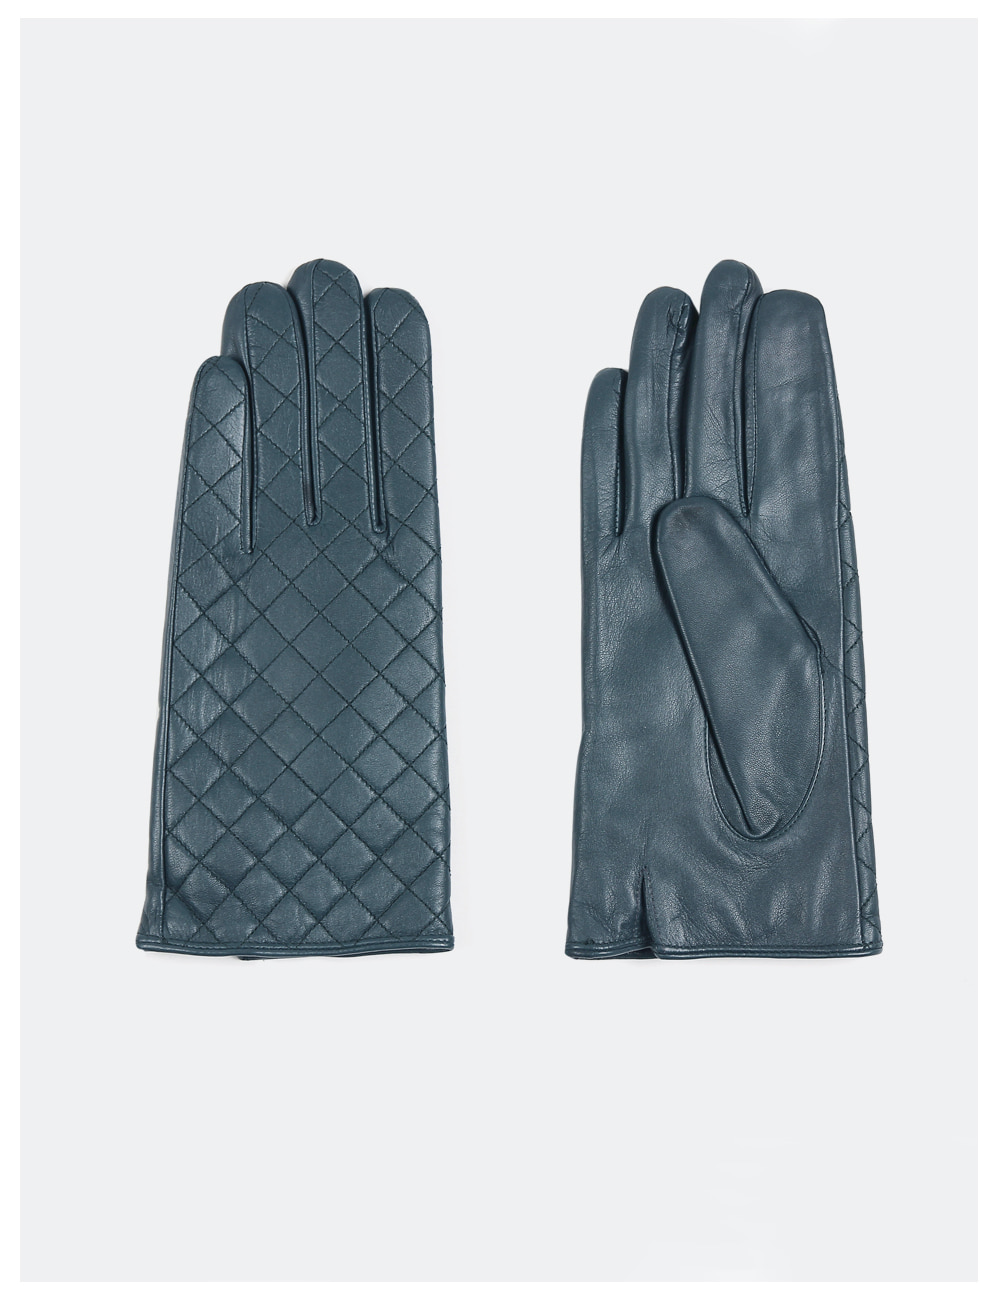 Classy viki Leather Gloves 클래시 비키 가죽 장갑